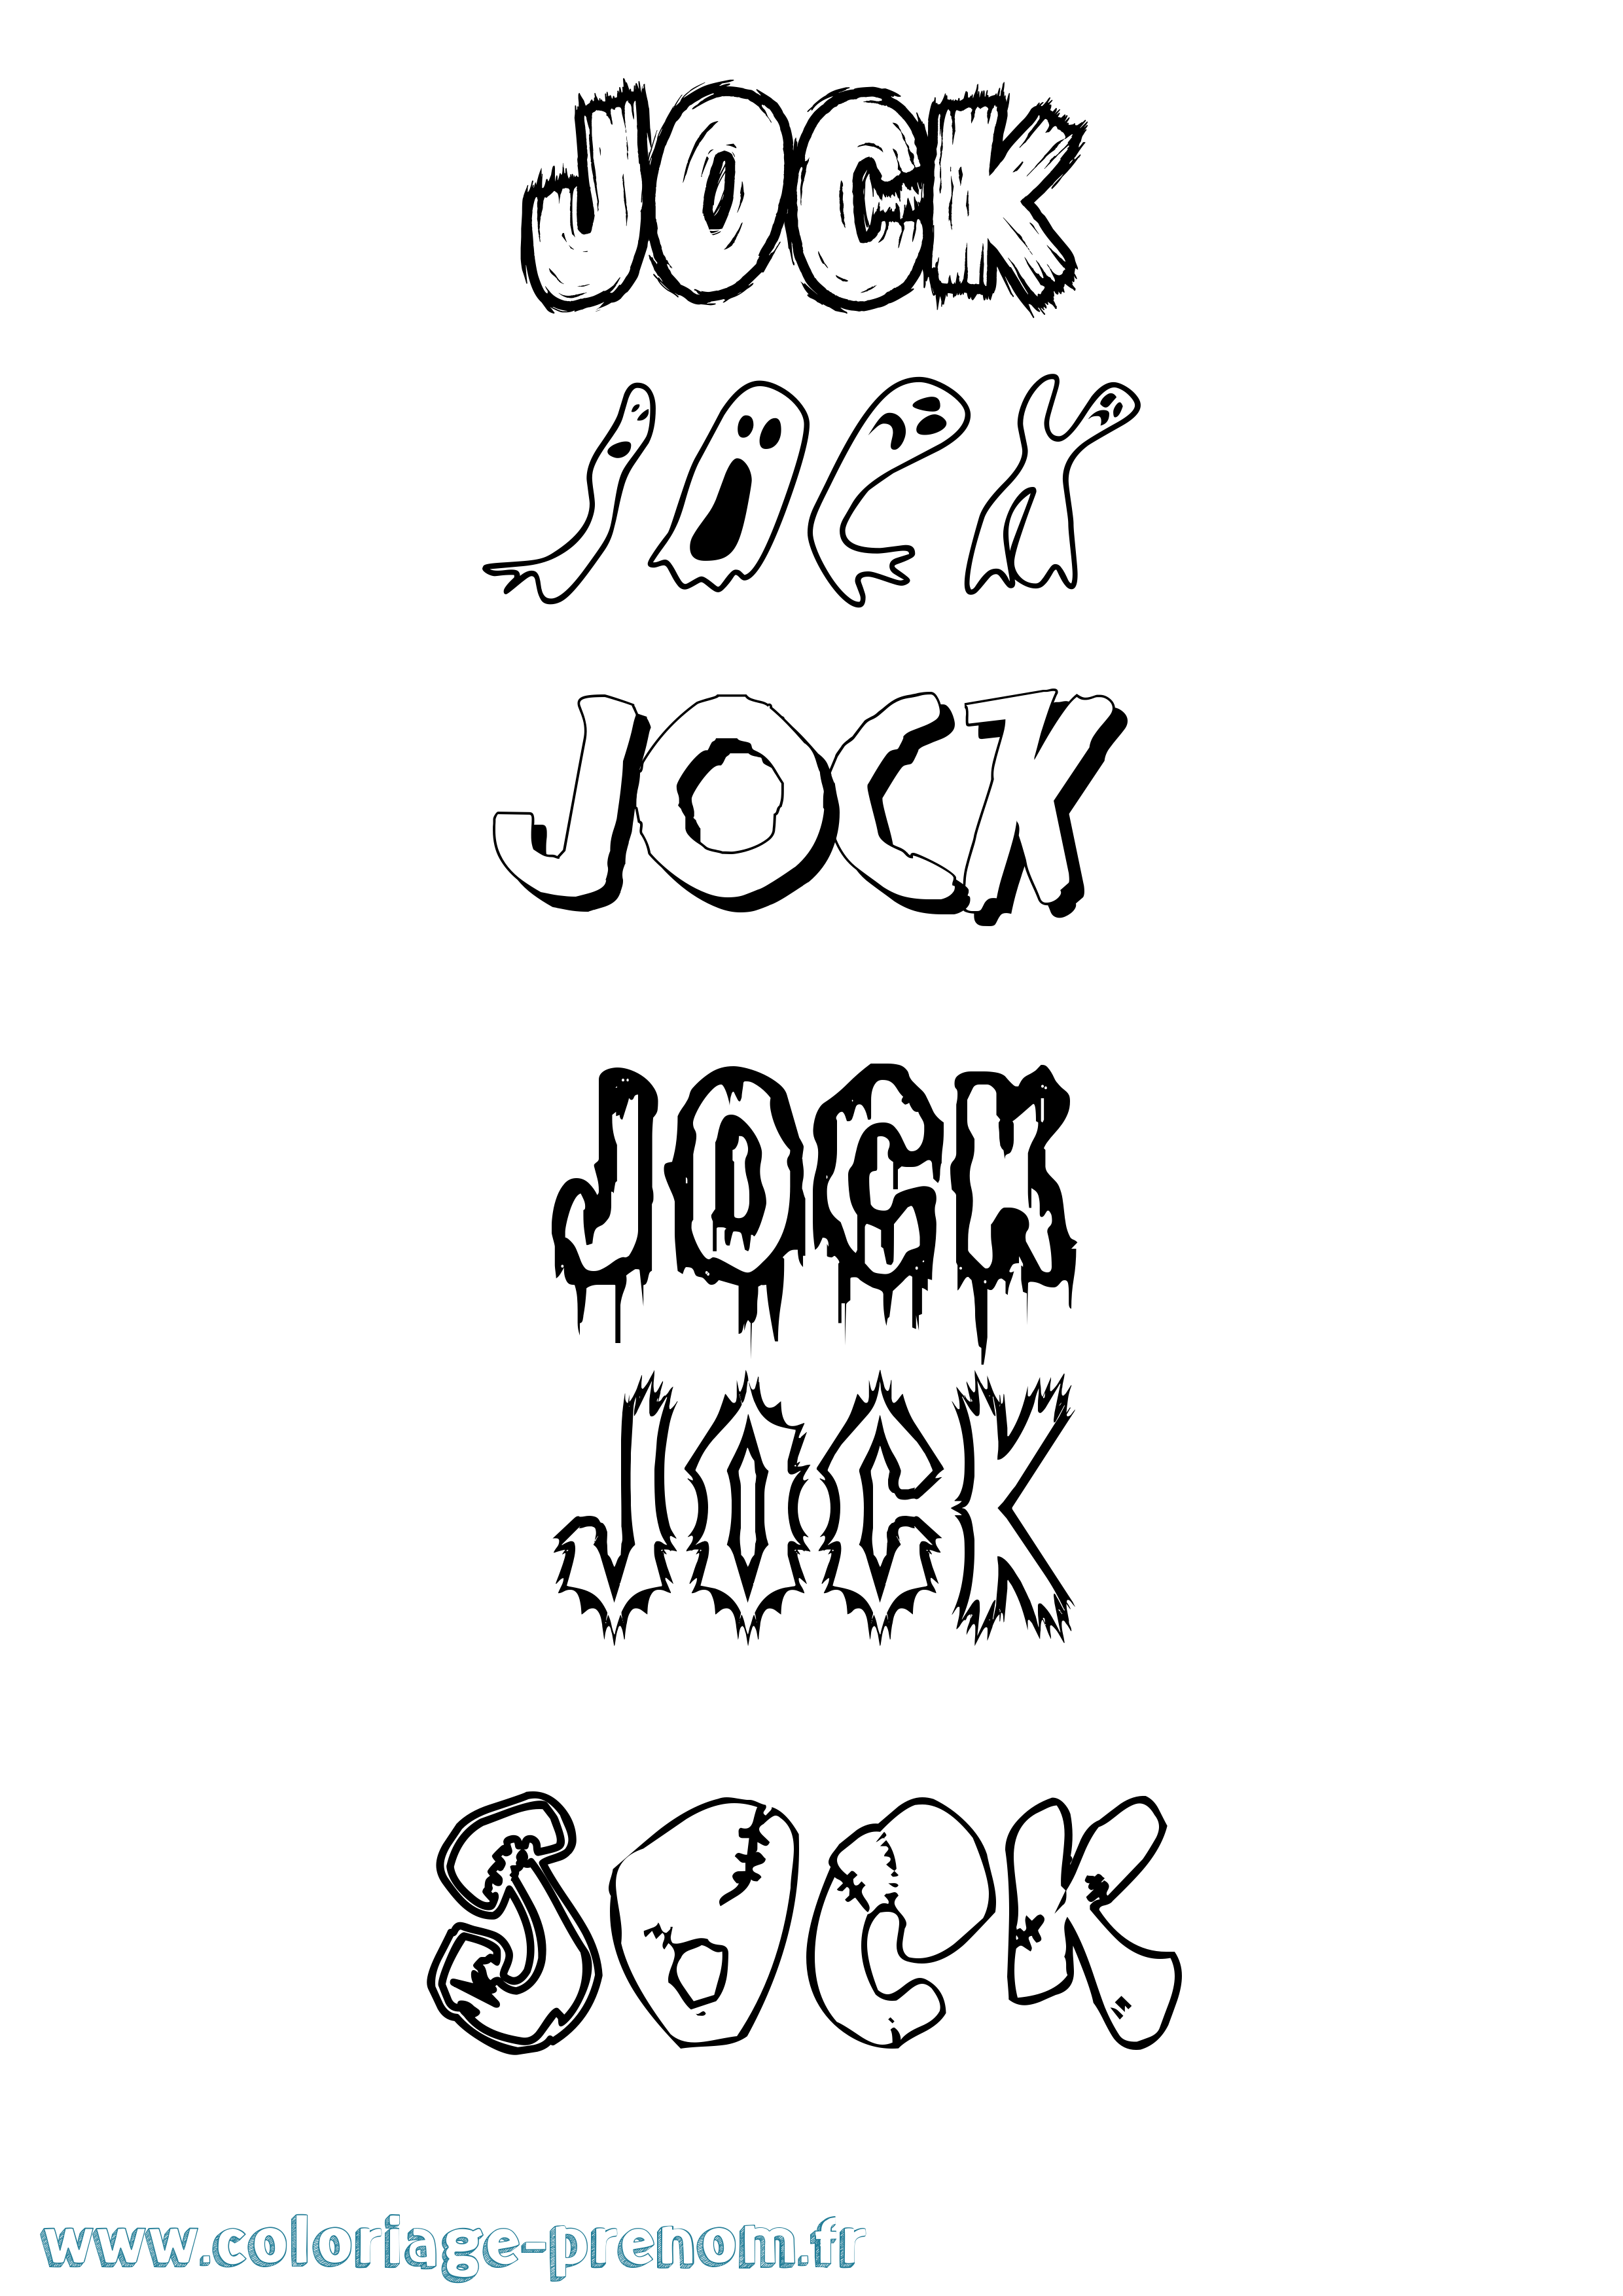 Coloriage prénom Jock Frisson